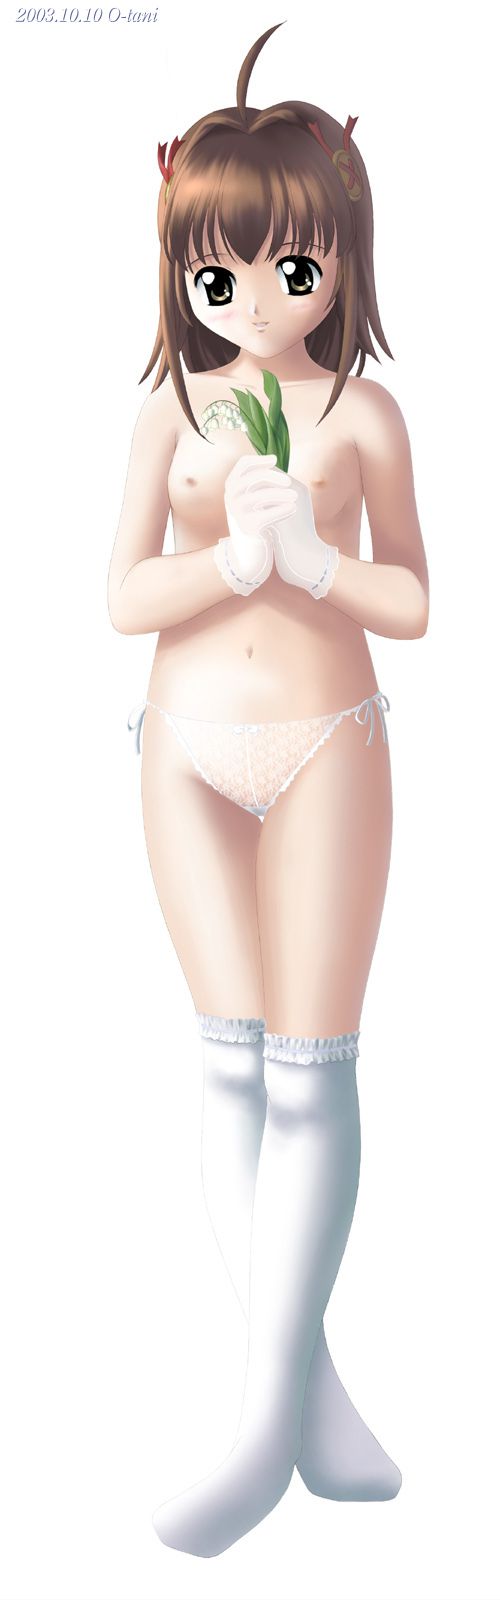 【Saga-chan】Secondary erotic image of Saga Bergman-chan, an 11-year-old Lori girl of Little Snow Angel Sugar 29